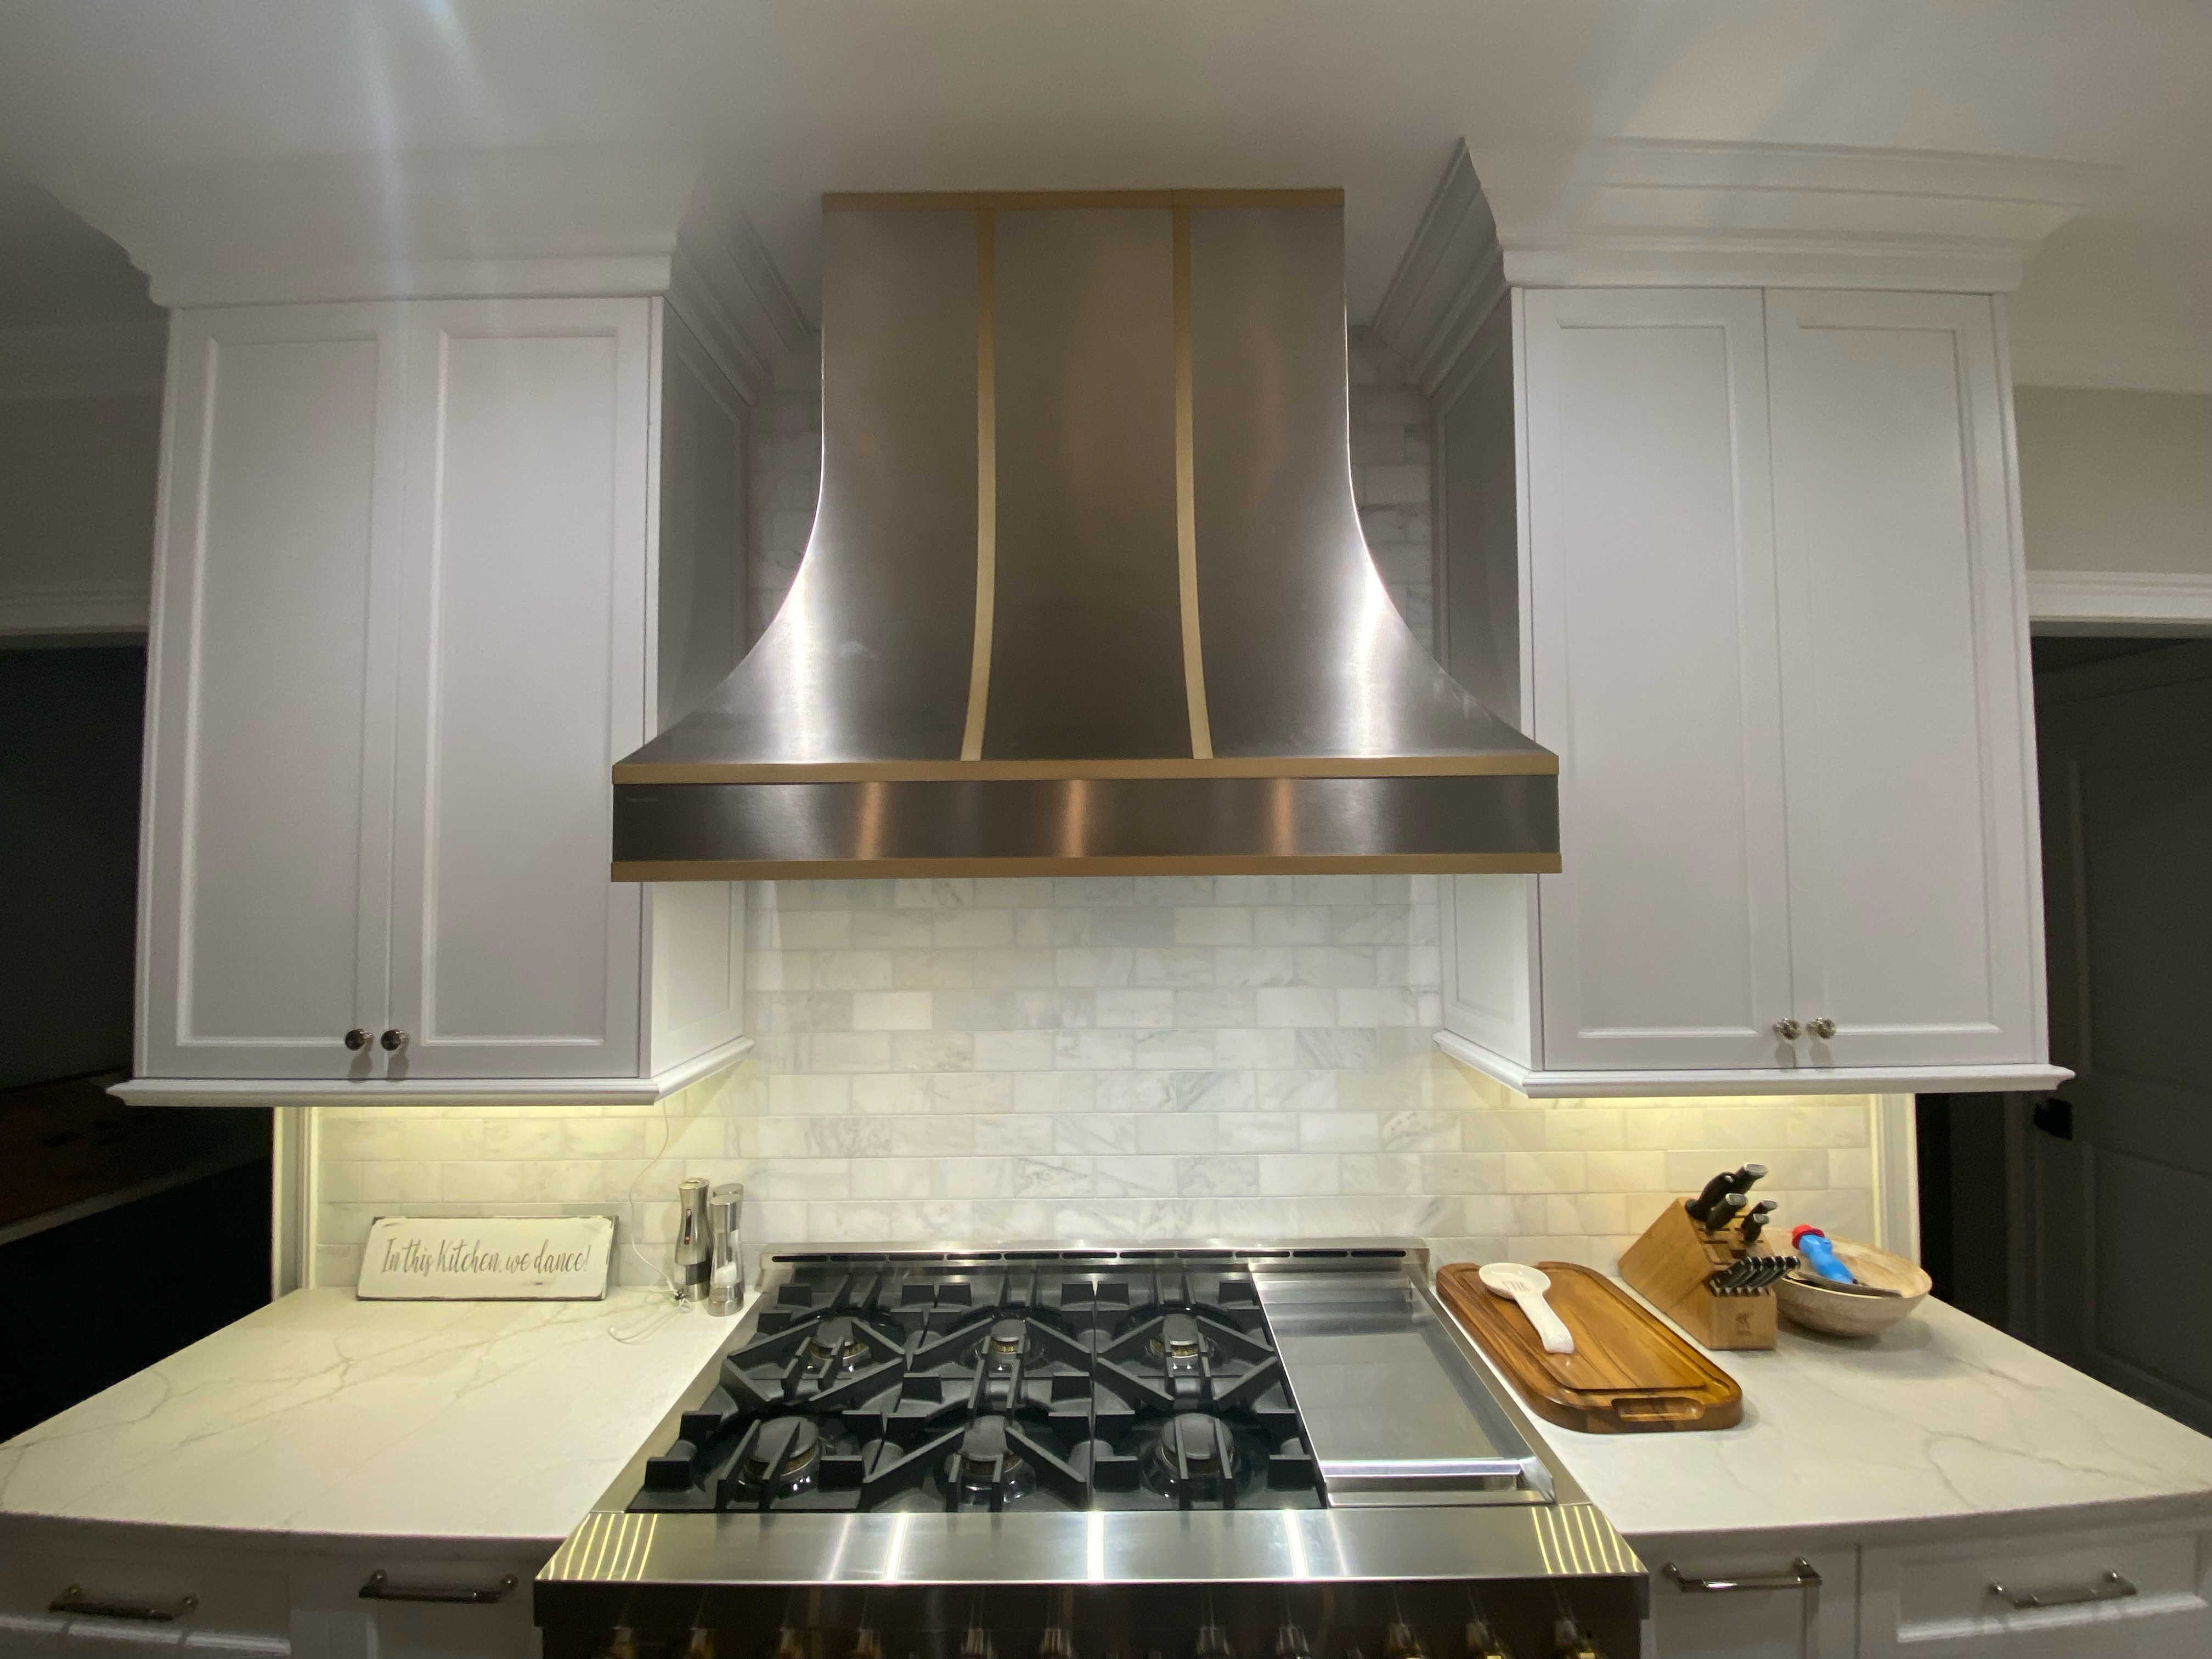 Range hood that complements the overall aesthetic kitchen design idea white kitchen cabinets, white kitchen countertops,marble backsplash